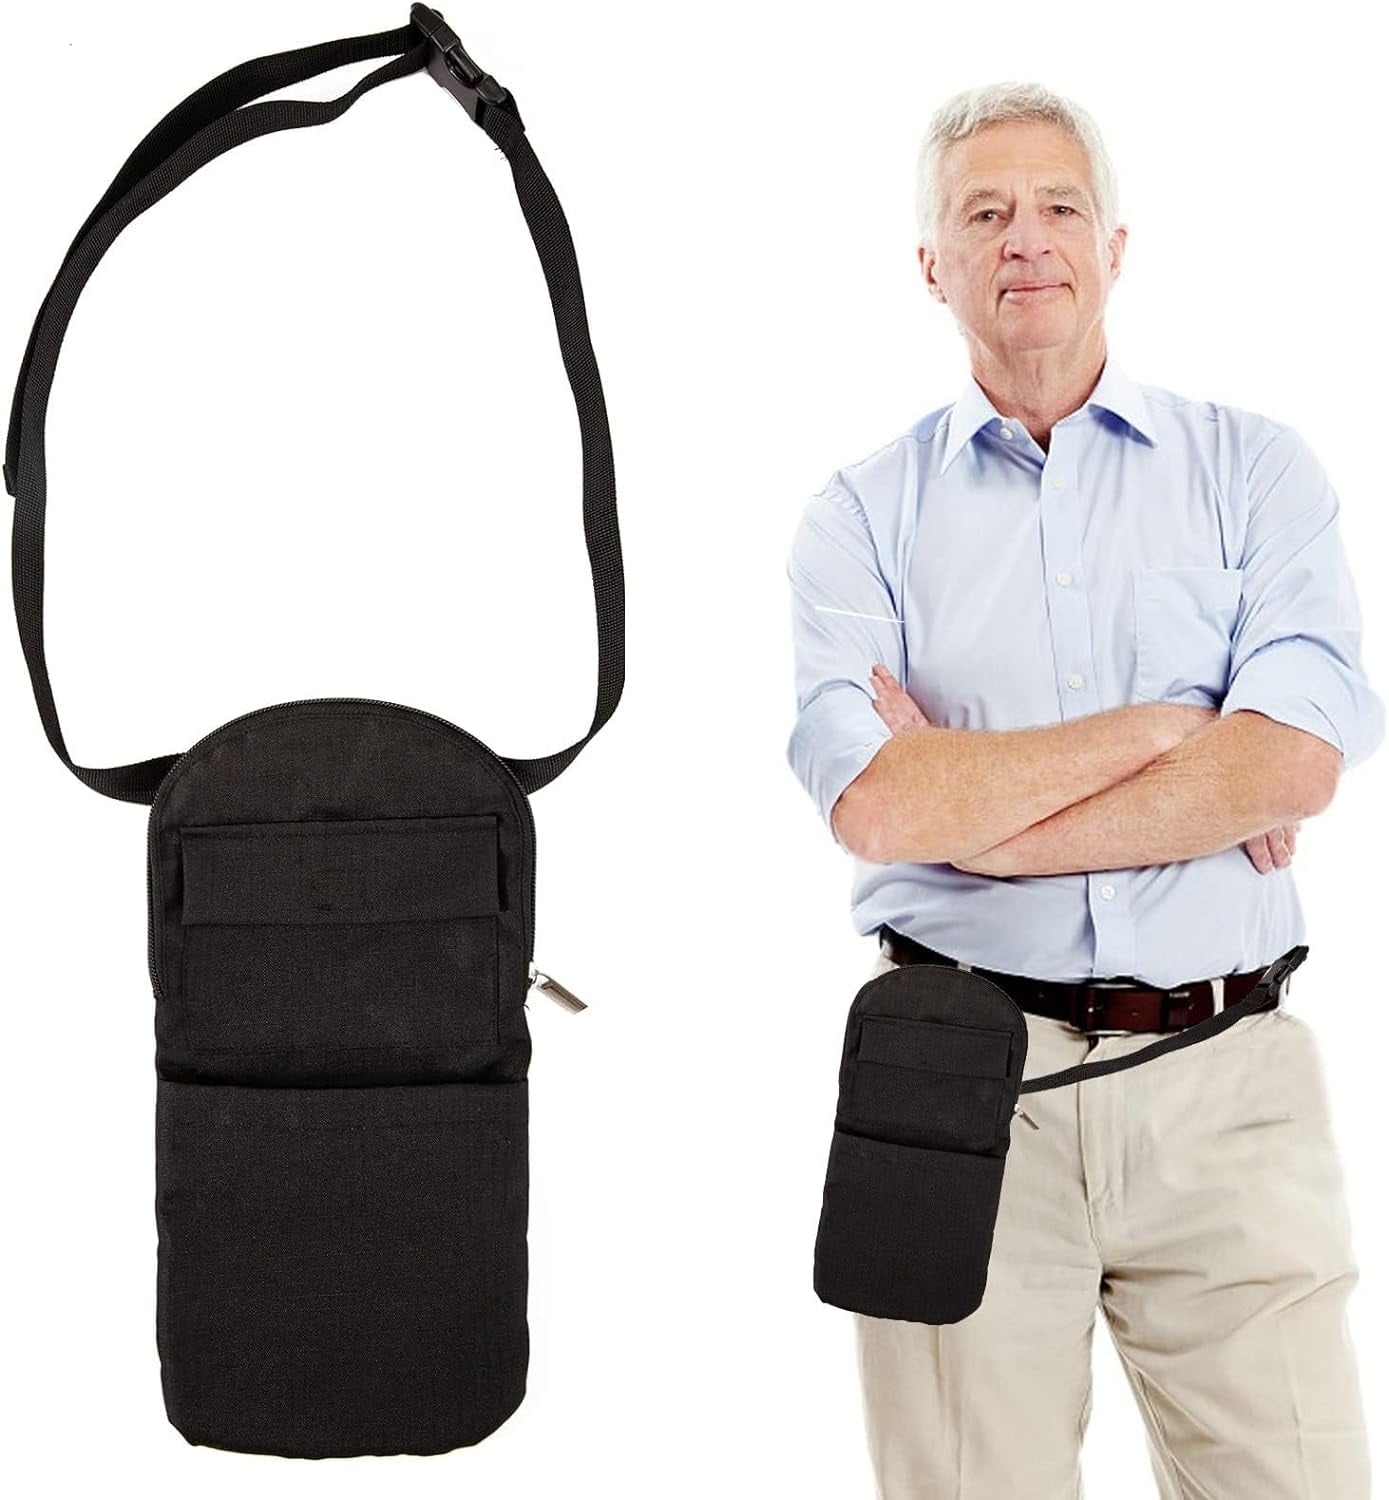 FANHAN Catheter Bag Cover with Belt,Urine Drainage Bag Holder ...